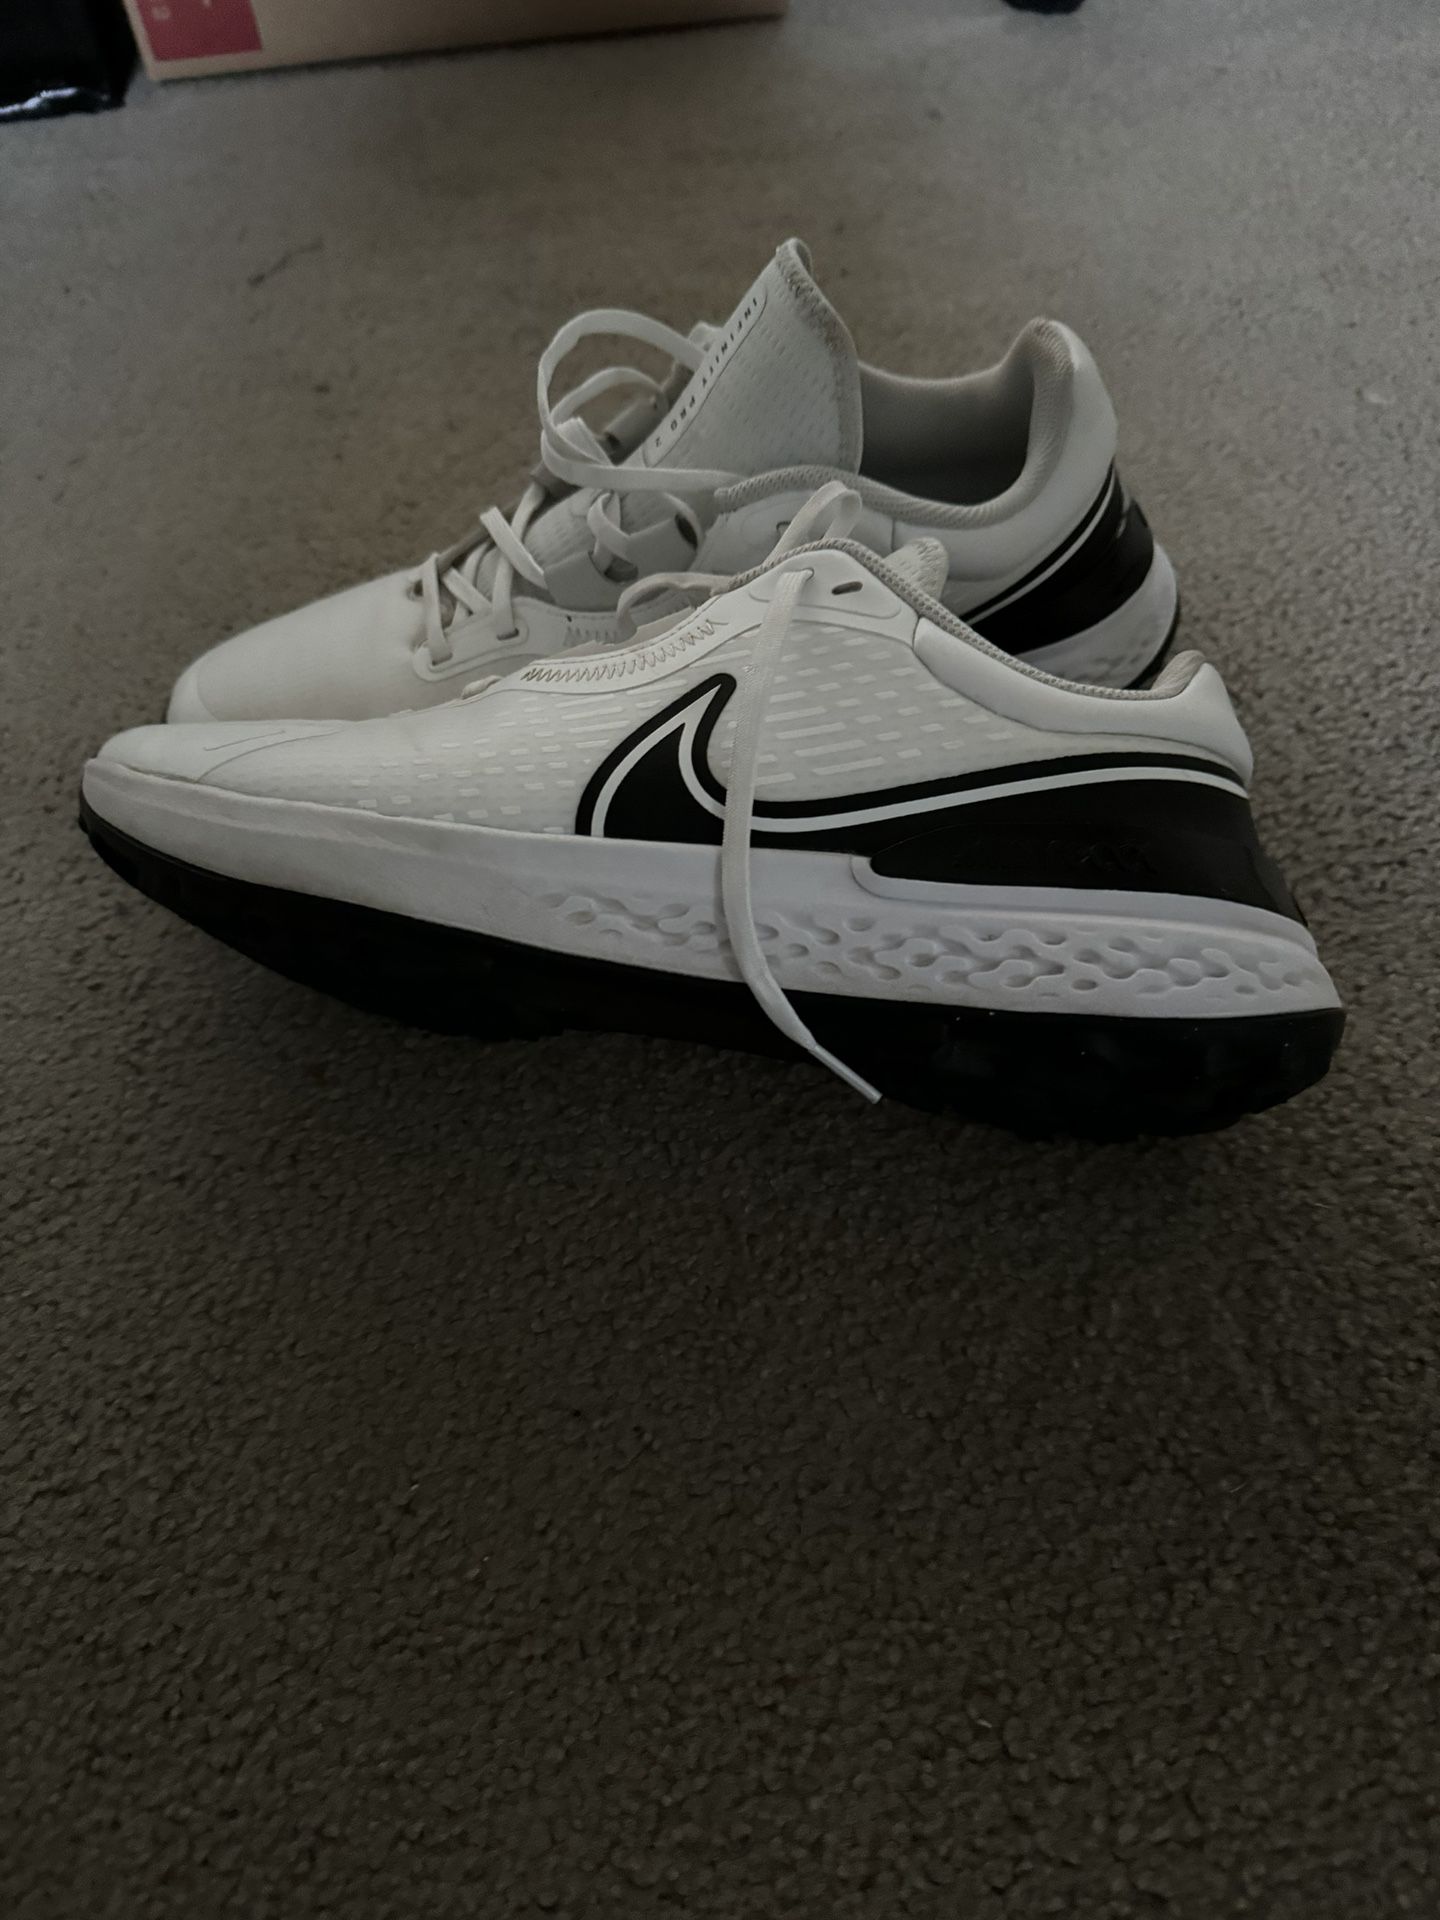 Nike Men’s Golf Shoes